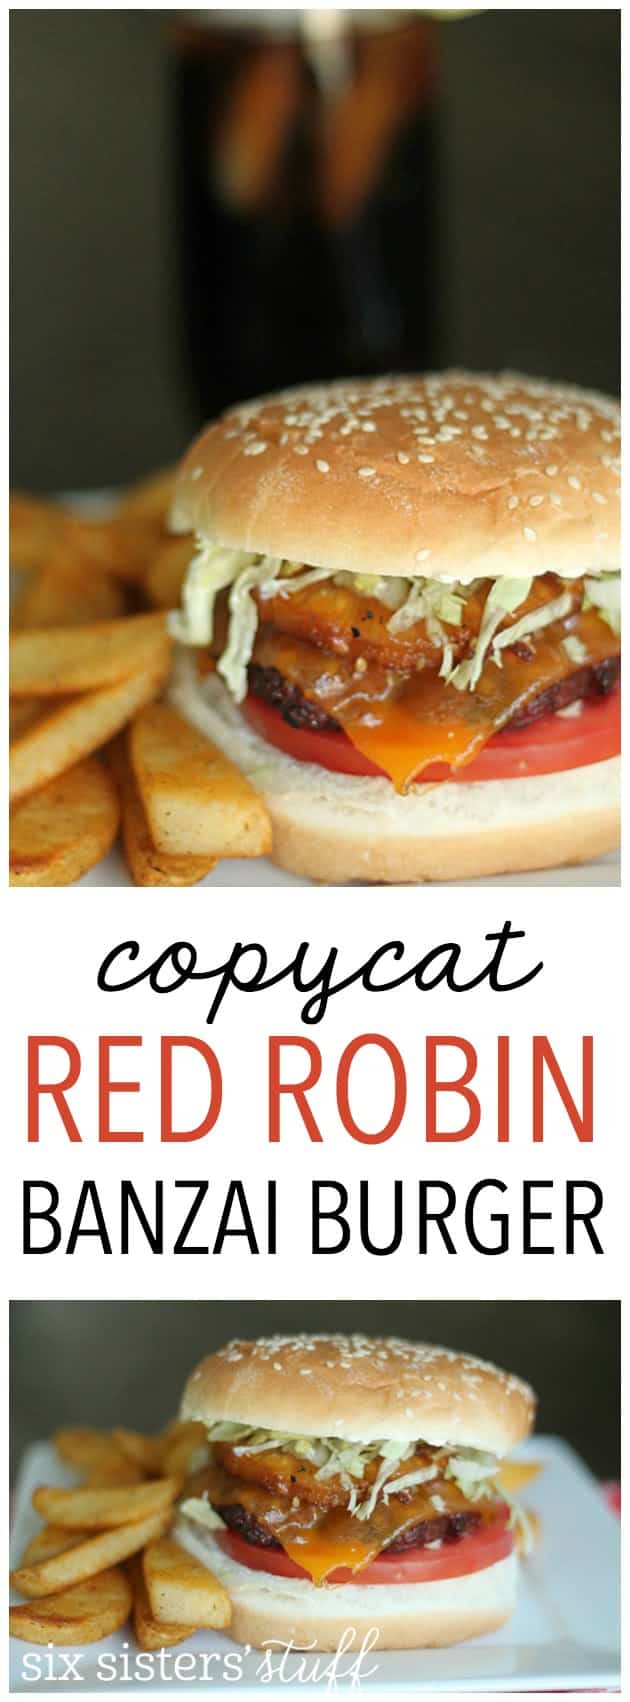 Copycat Red Robin Banzai Burger from SixSistersStuff.com